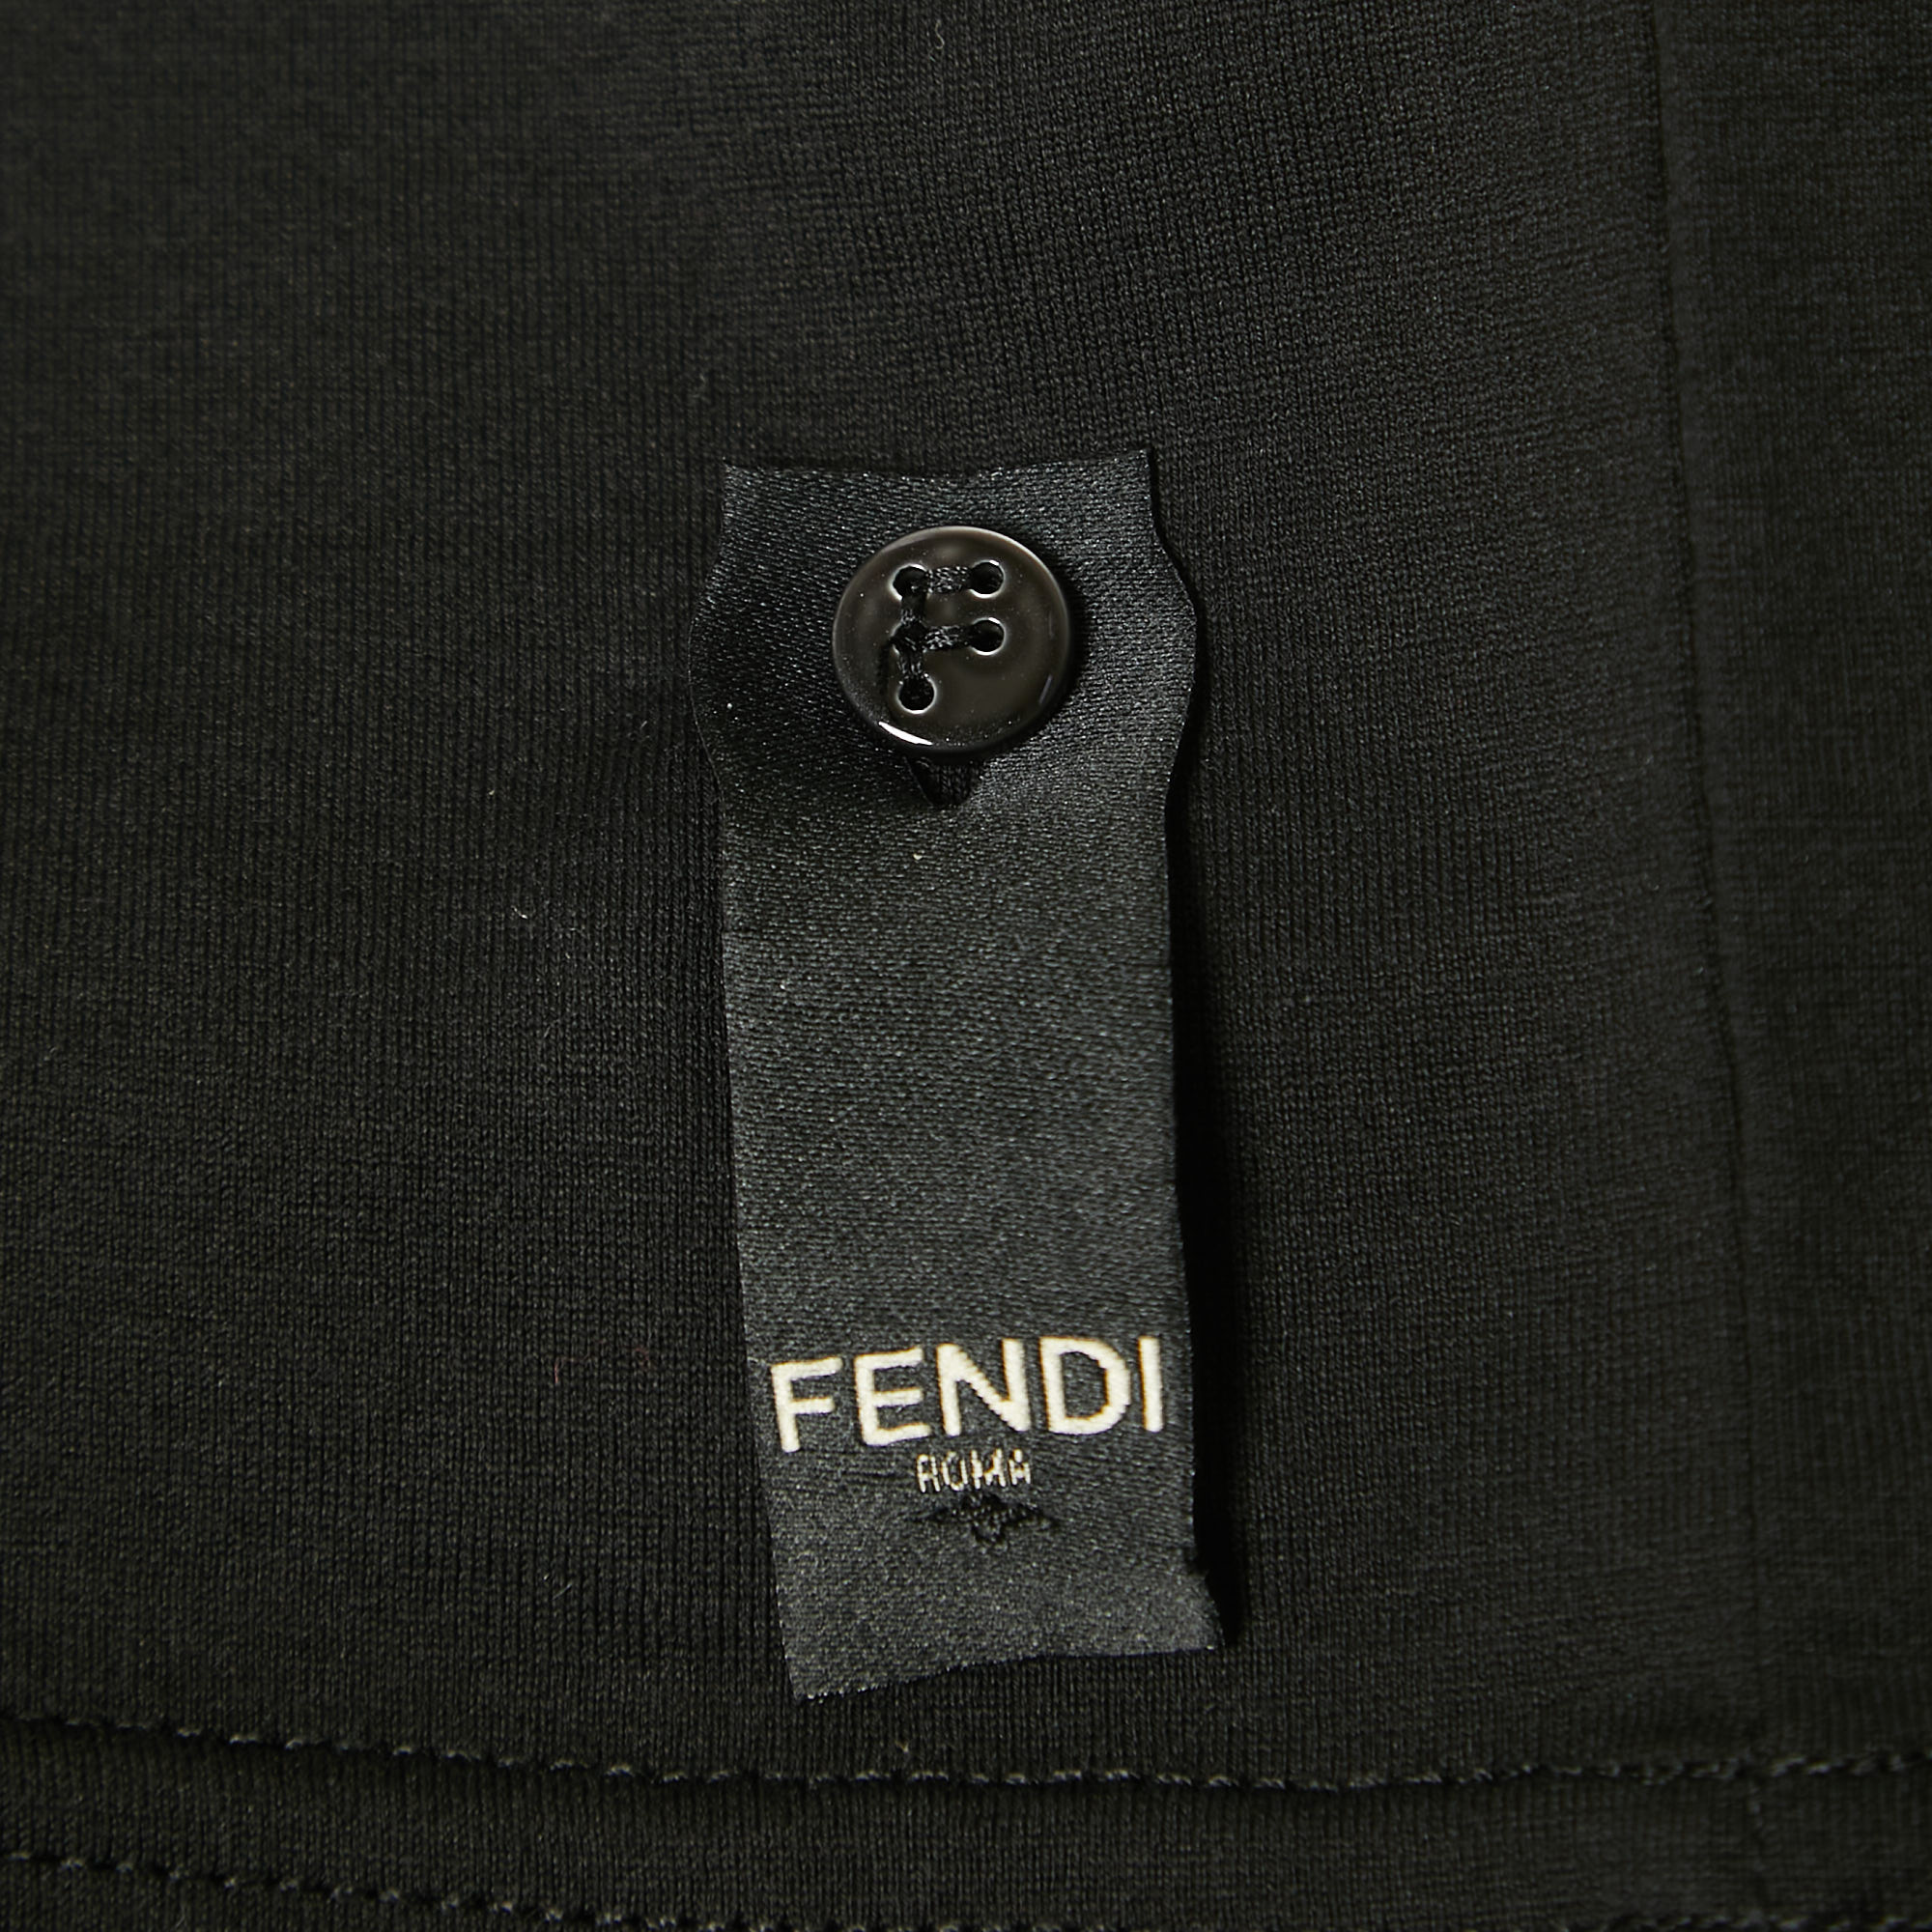 Fendi Black Logo Embroidered Cotton Half Sleeve T-Shirt XS